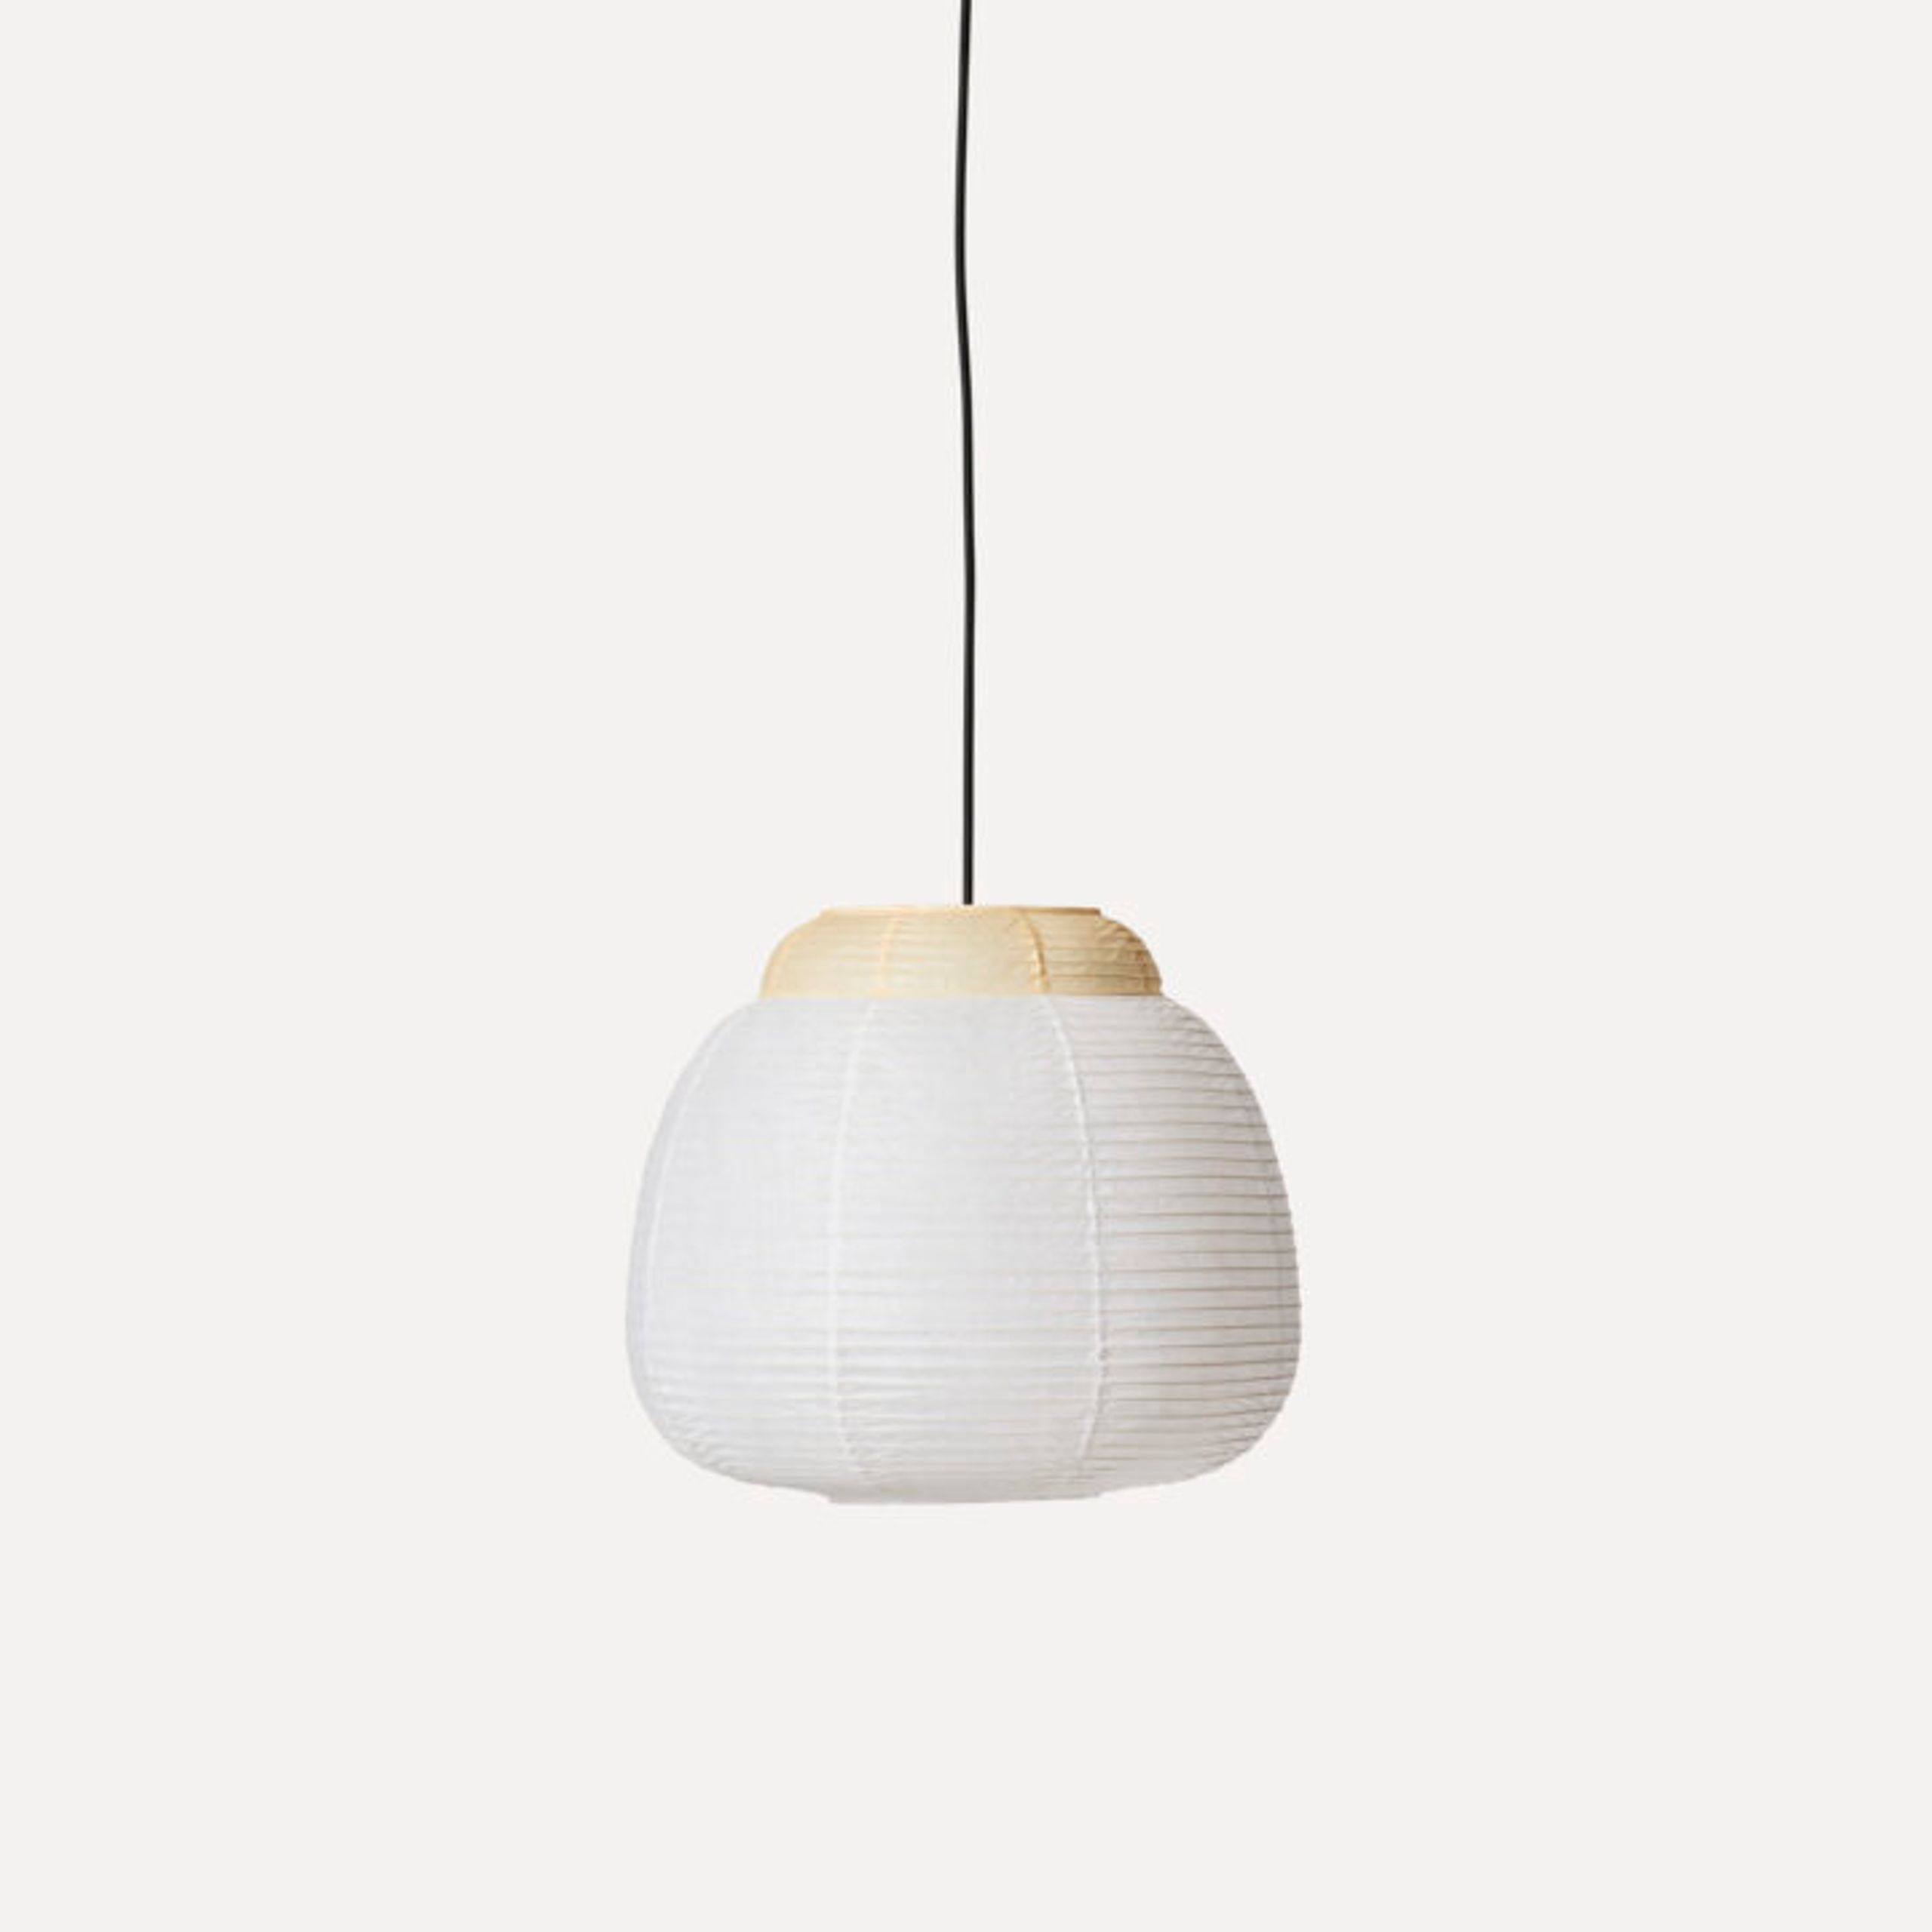 Made by Hand - Lampe de plafond - Papier Single lamp  - Soft Yellow